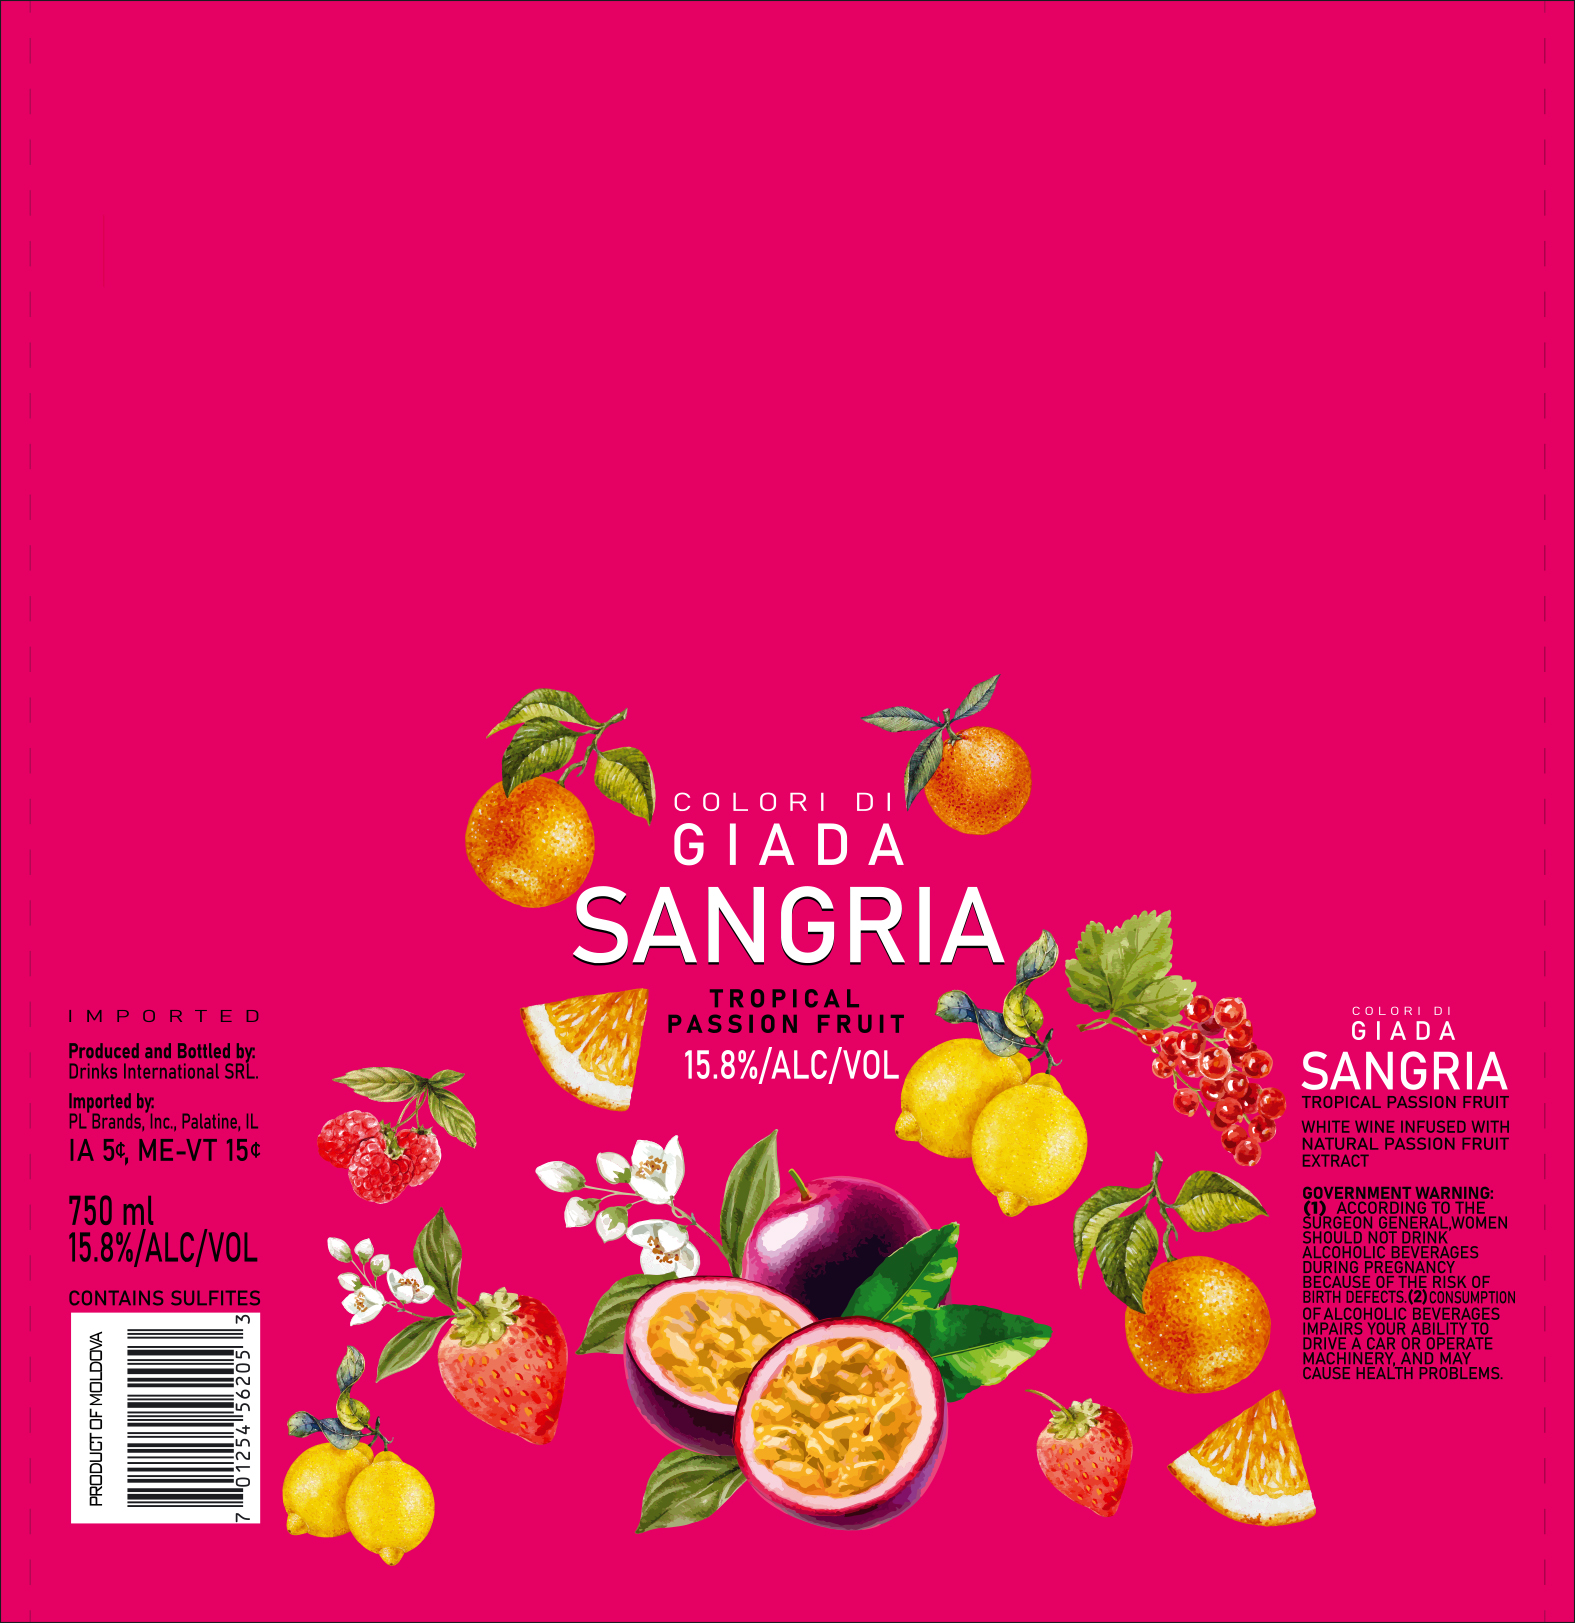 Colori Di Giada Sangria Passion Fruit 750 ml 12 units per case 25.4 fl Product Label